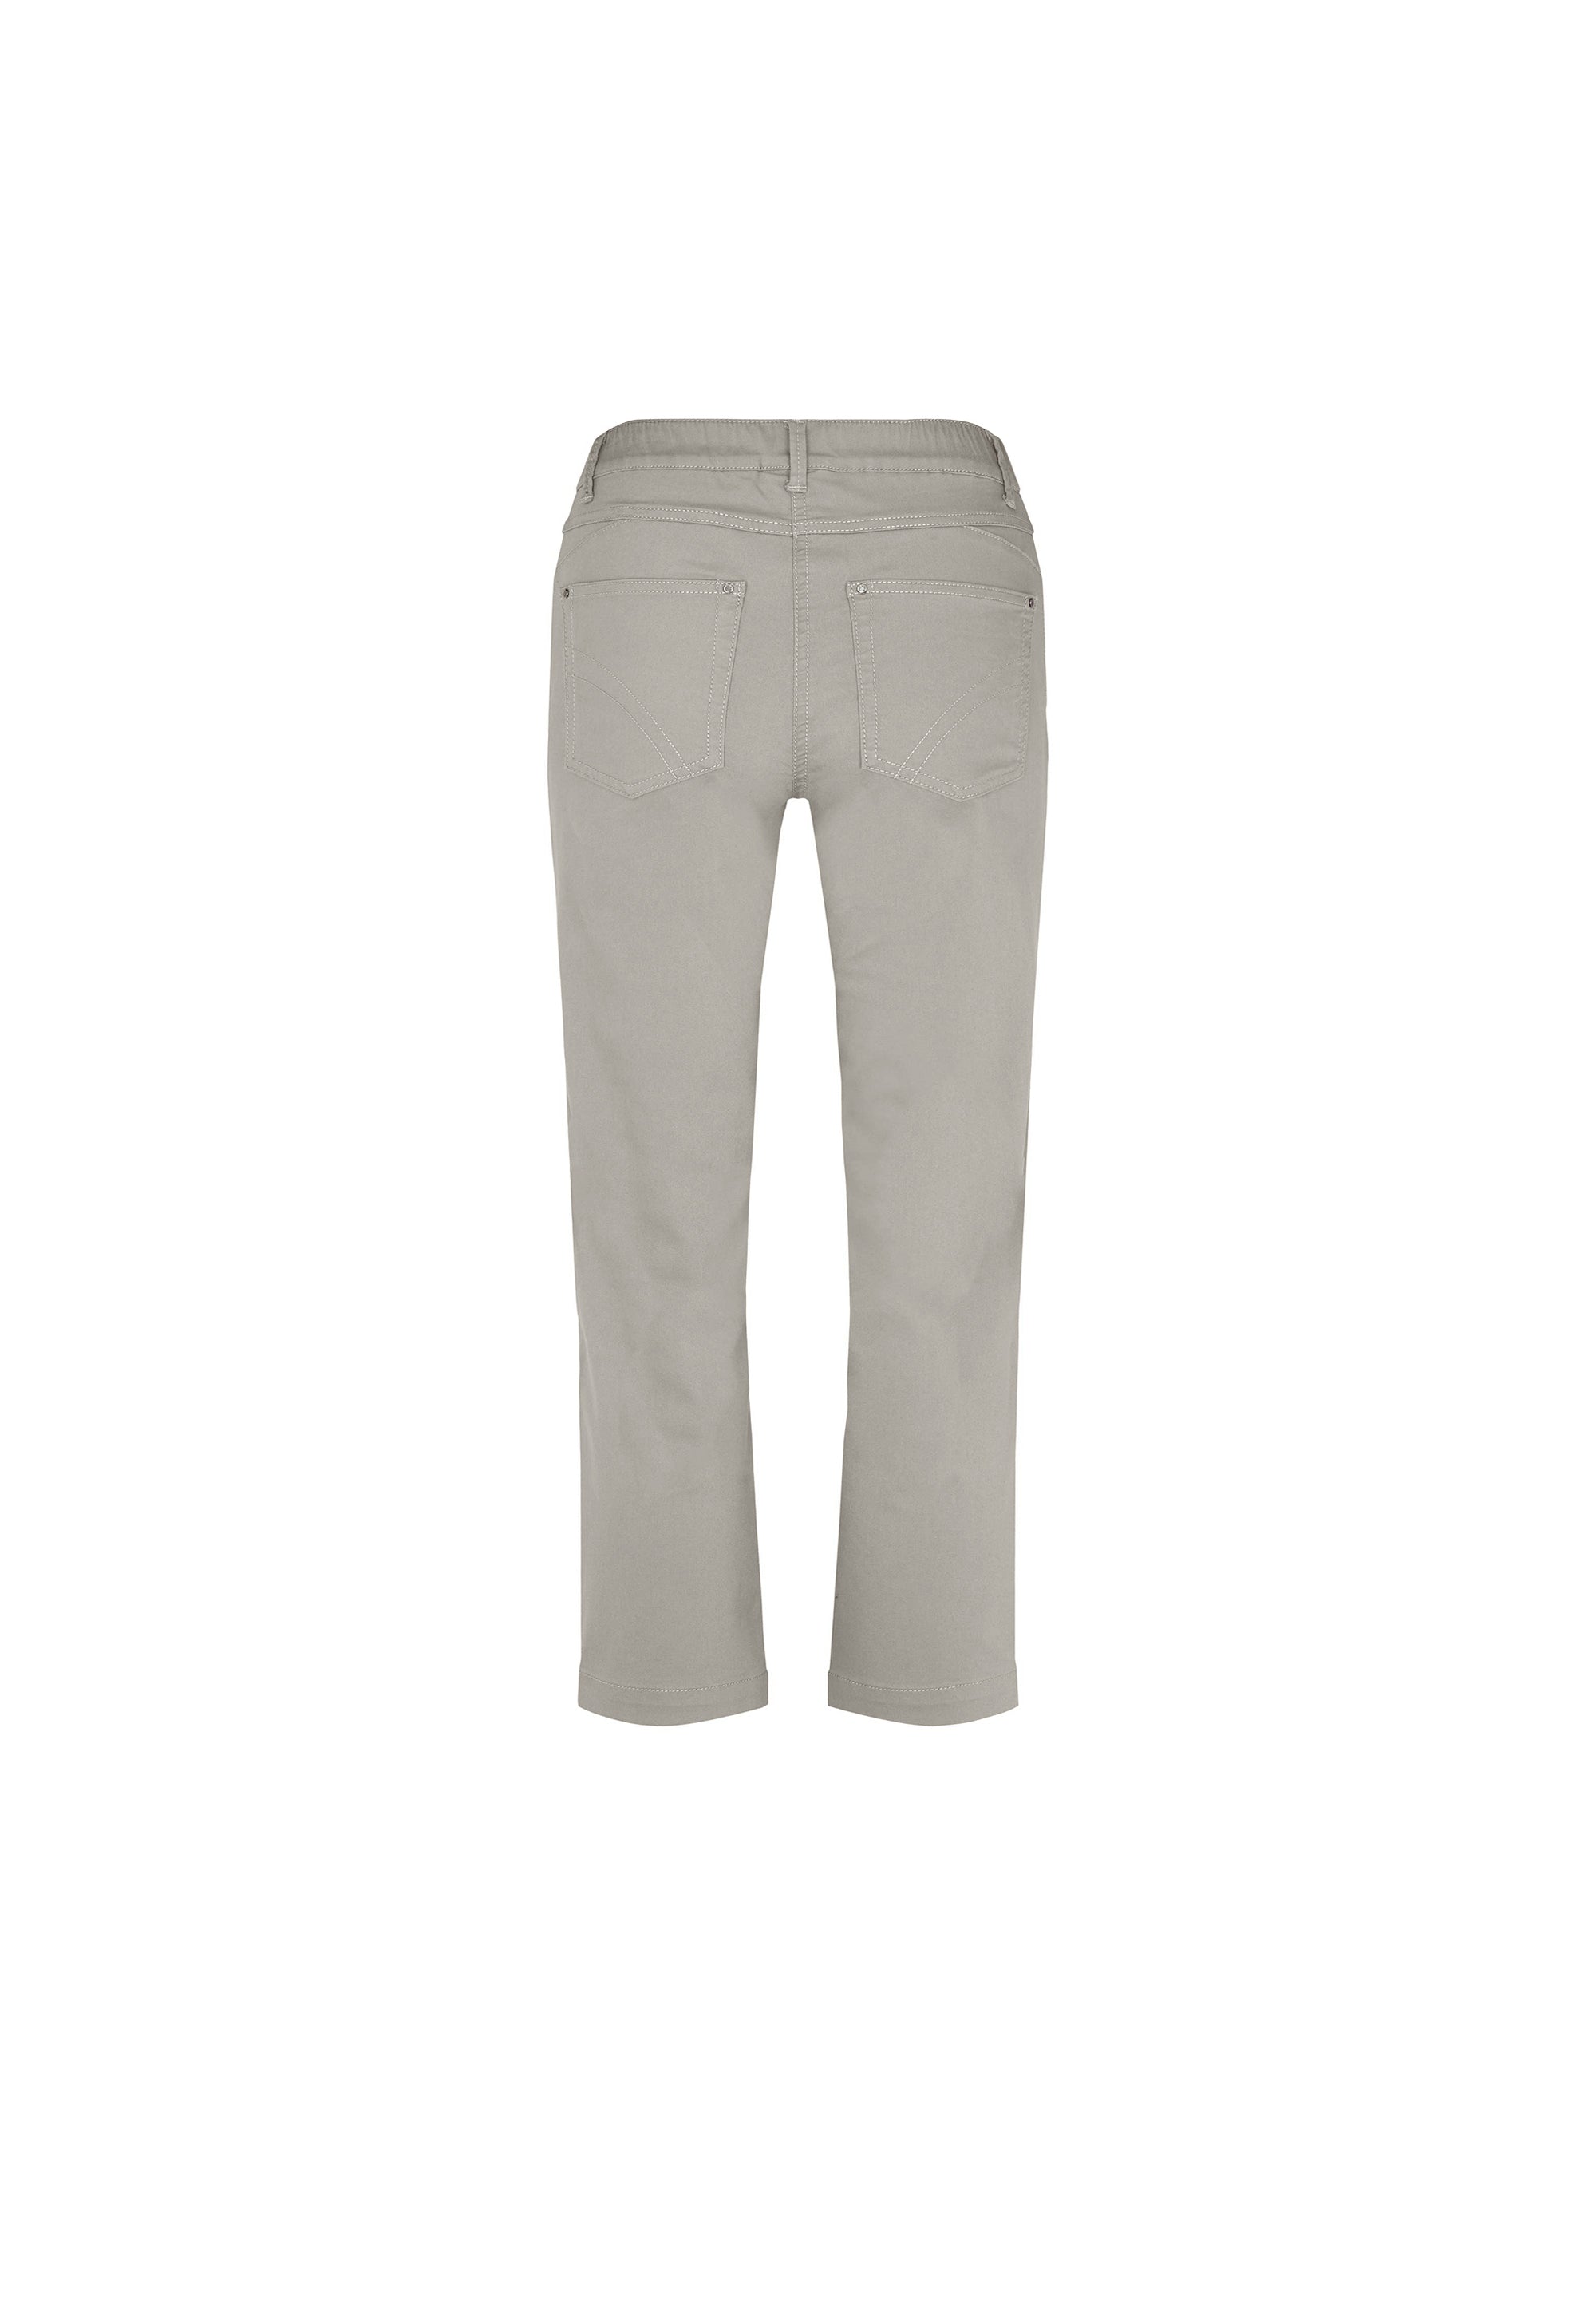 LAURIE Hannah Regular - Extra Short Length Trousers REGULAR 25000 Grey Sand